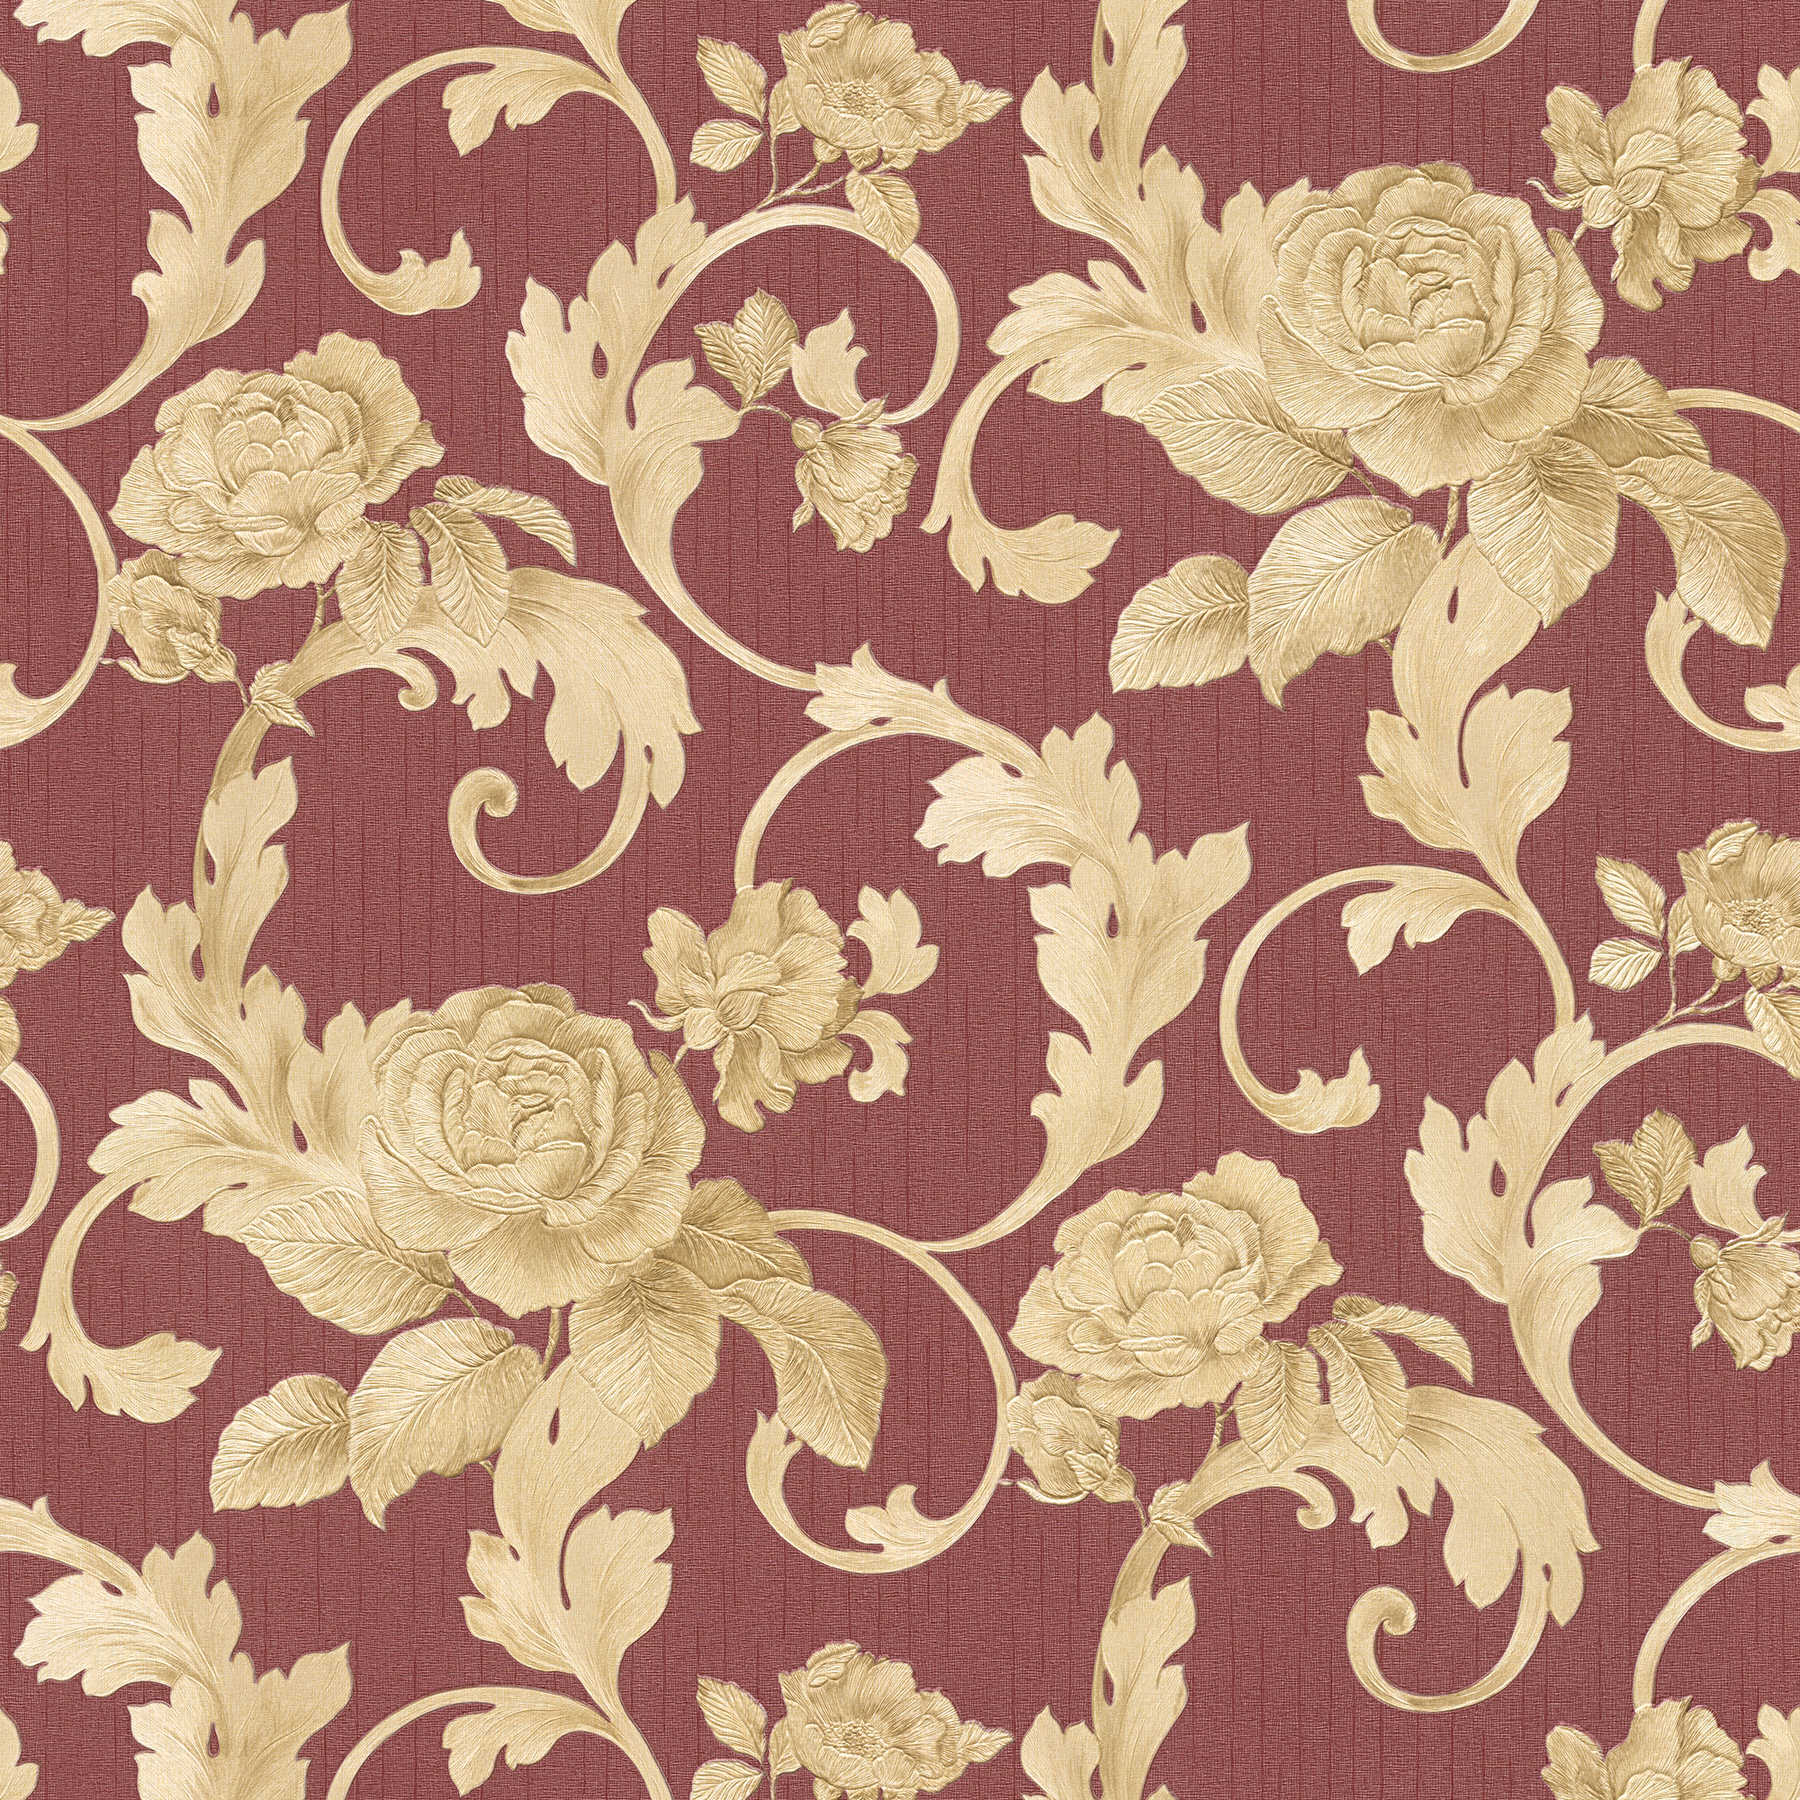         Golden Rose Vines & Textured Pattern Wallpaper - Metallic, Rood
    